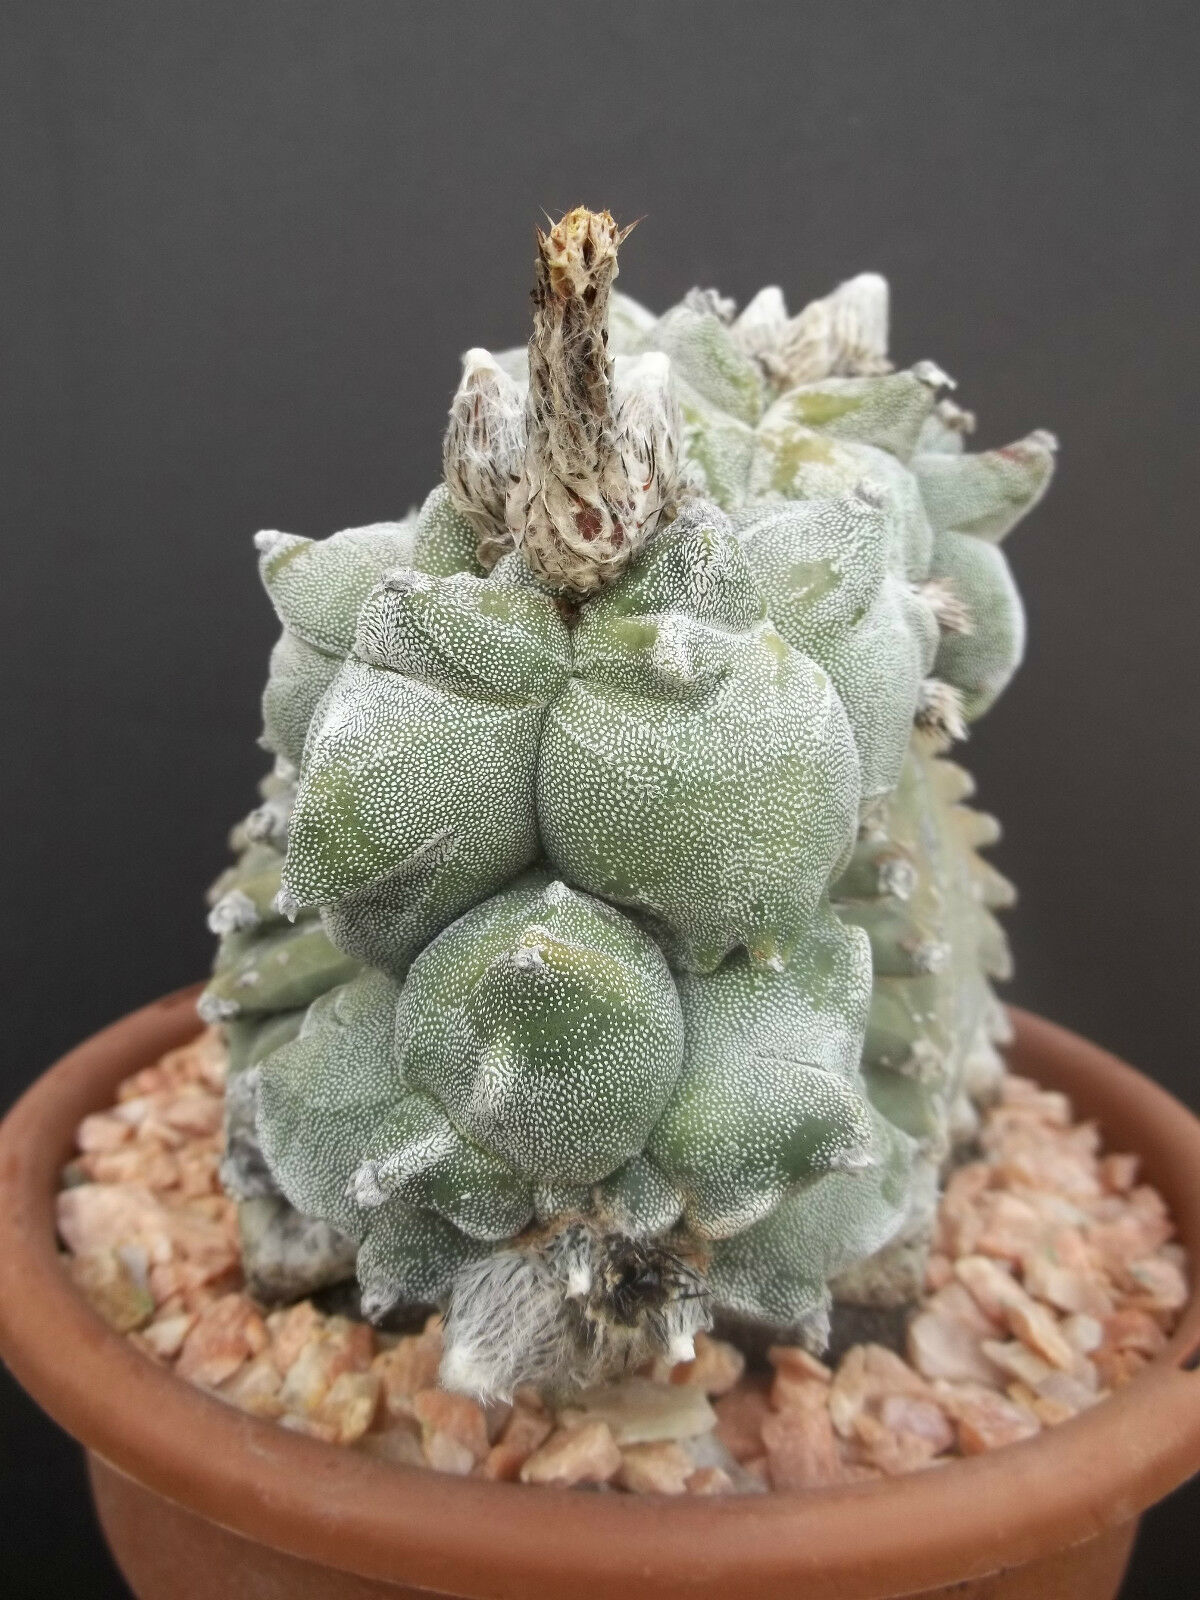 Astrophytum myriostigma KIKO WHITE rare cactus cacti japan hybrid seeds 20 SEEDS - $8.99